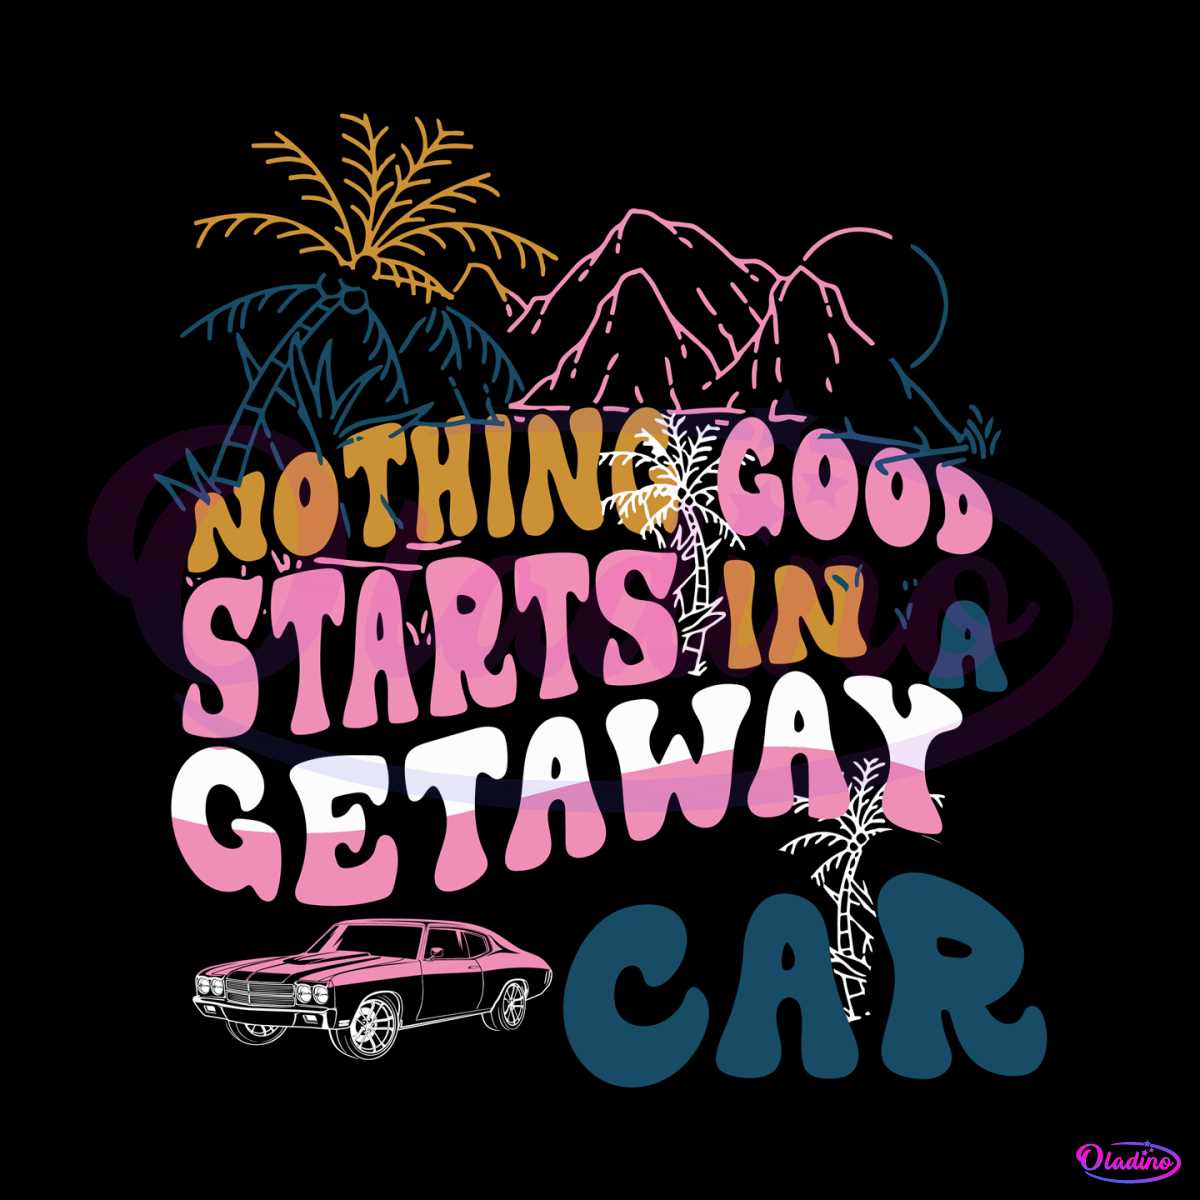 getaway-car-taylor-nothing-good-reputation-svg-silhouette-file